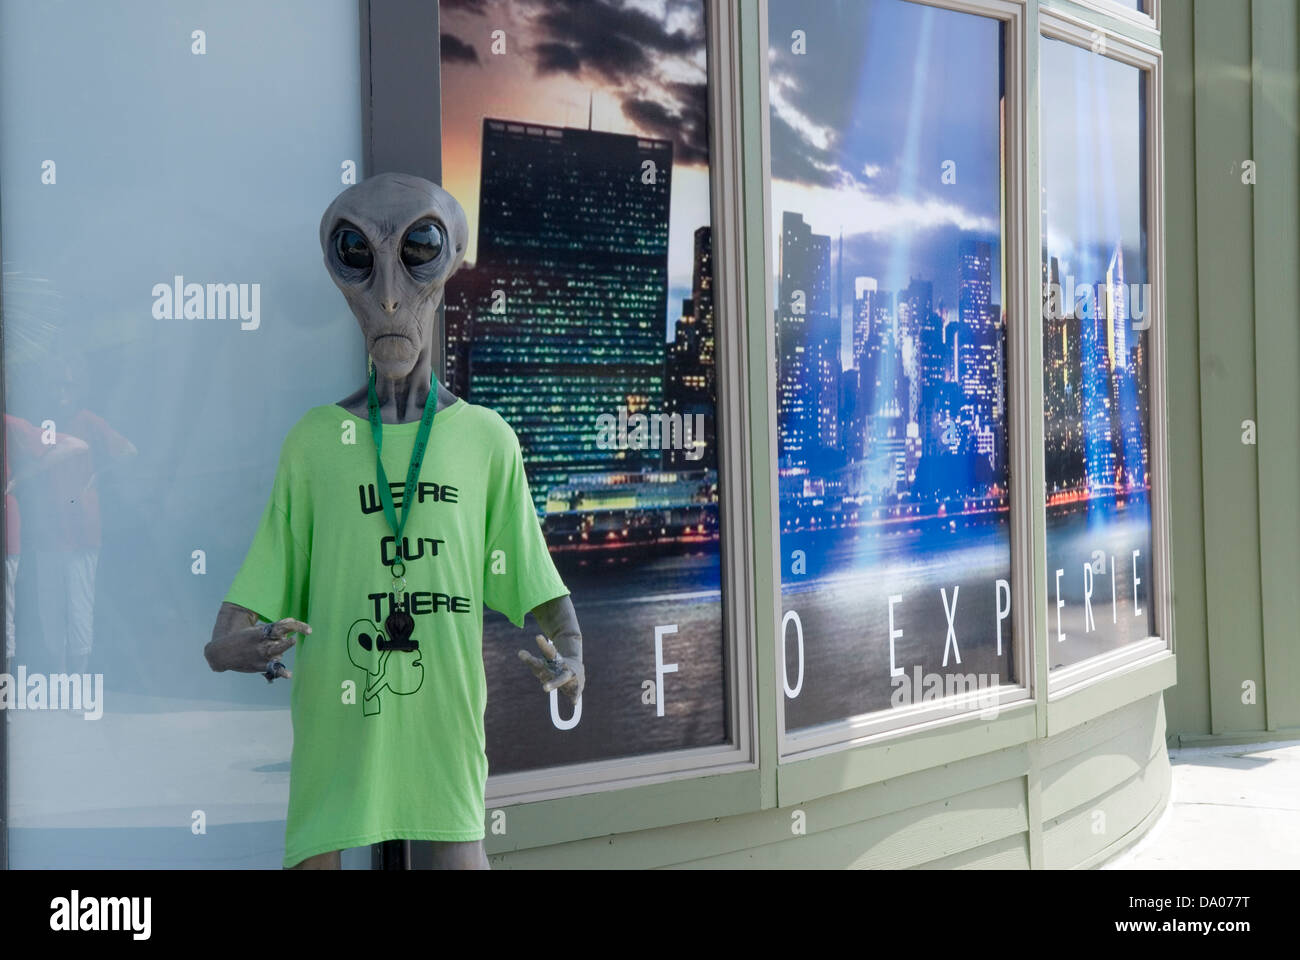 Encounters UFO Experience Myrtle Beach South Carolina USA Stock Photo